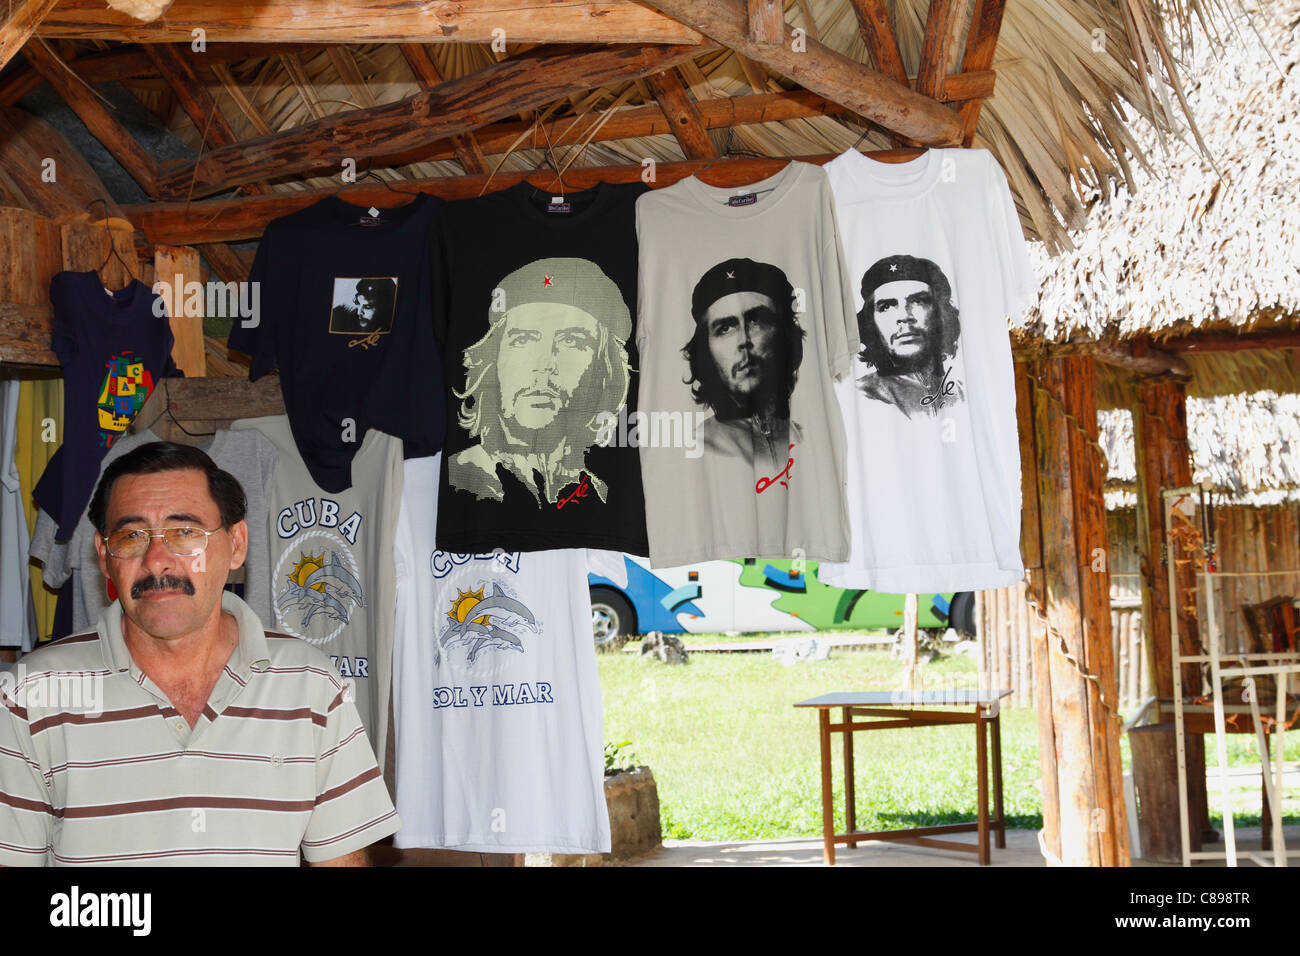 Kubanische Verkäufer und Che Guevara bedruckten T-shirts zum Verkauf in Kuba, November 2010 Stockfoto